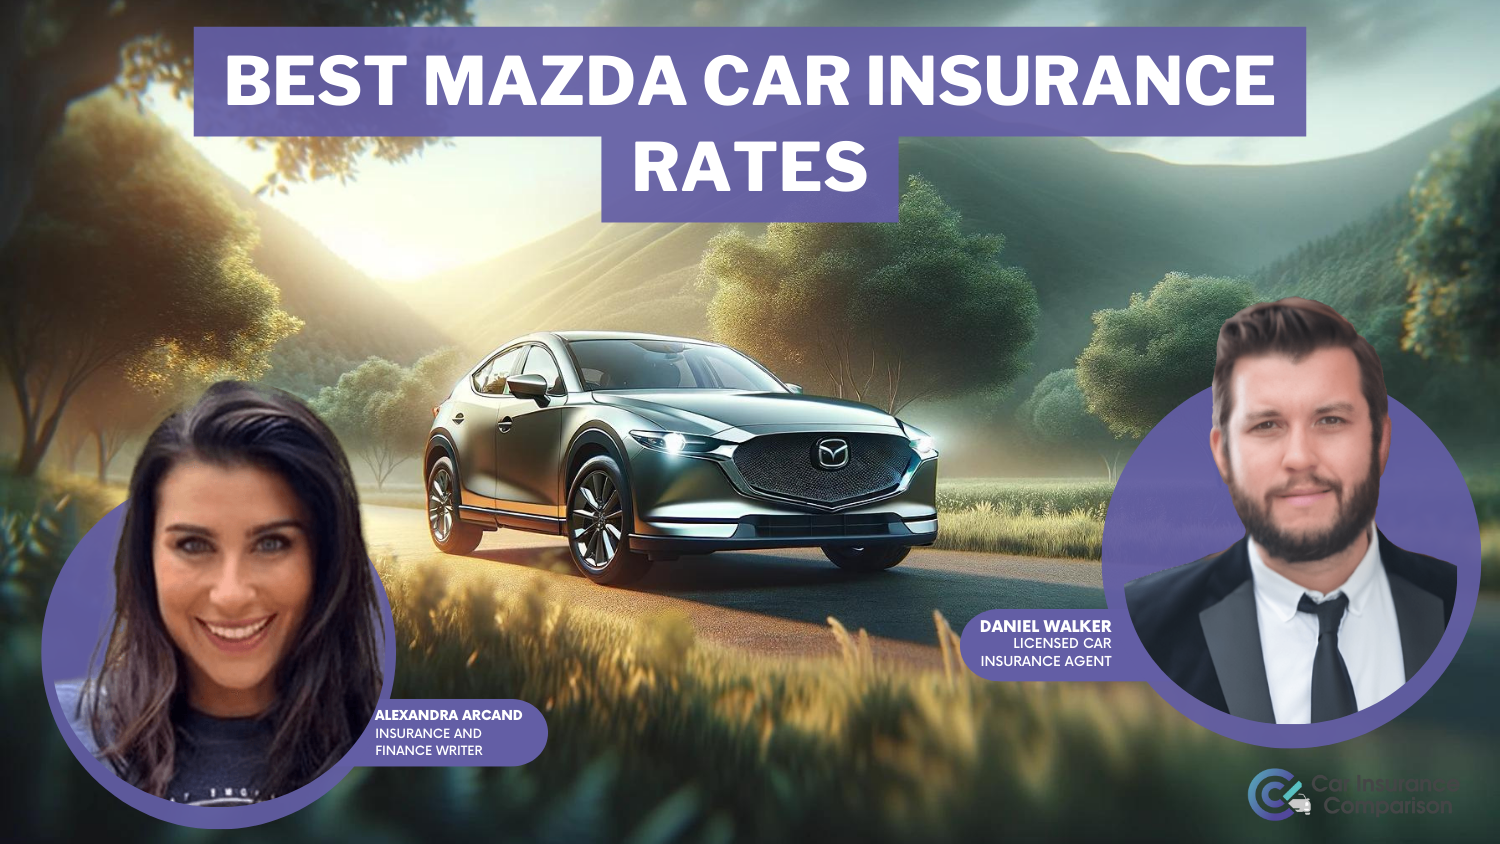 Best Mazda Car Insurance Rates: Travelers, Progressive, Allstate